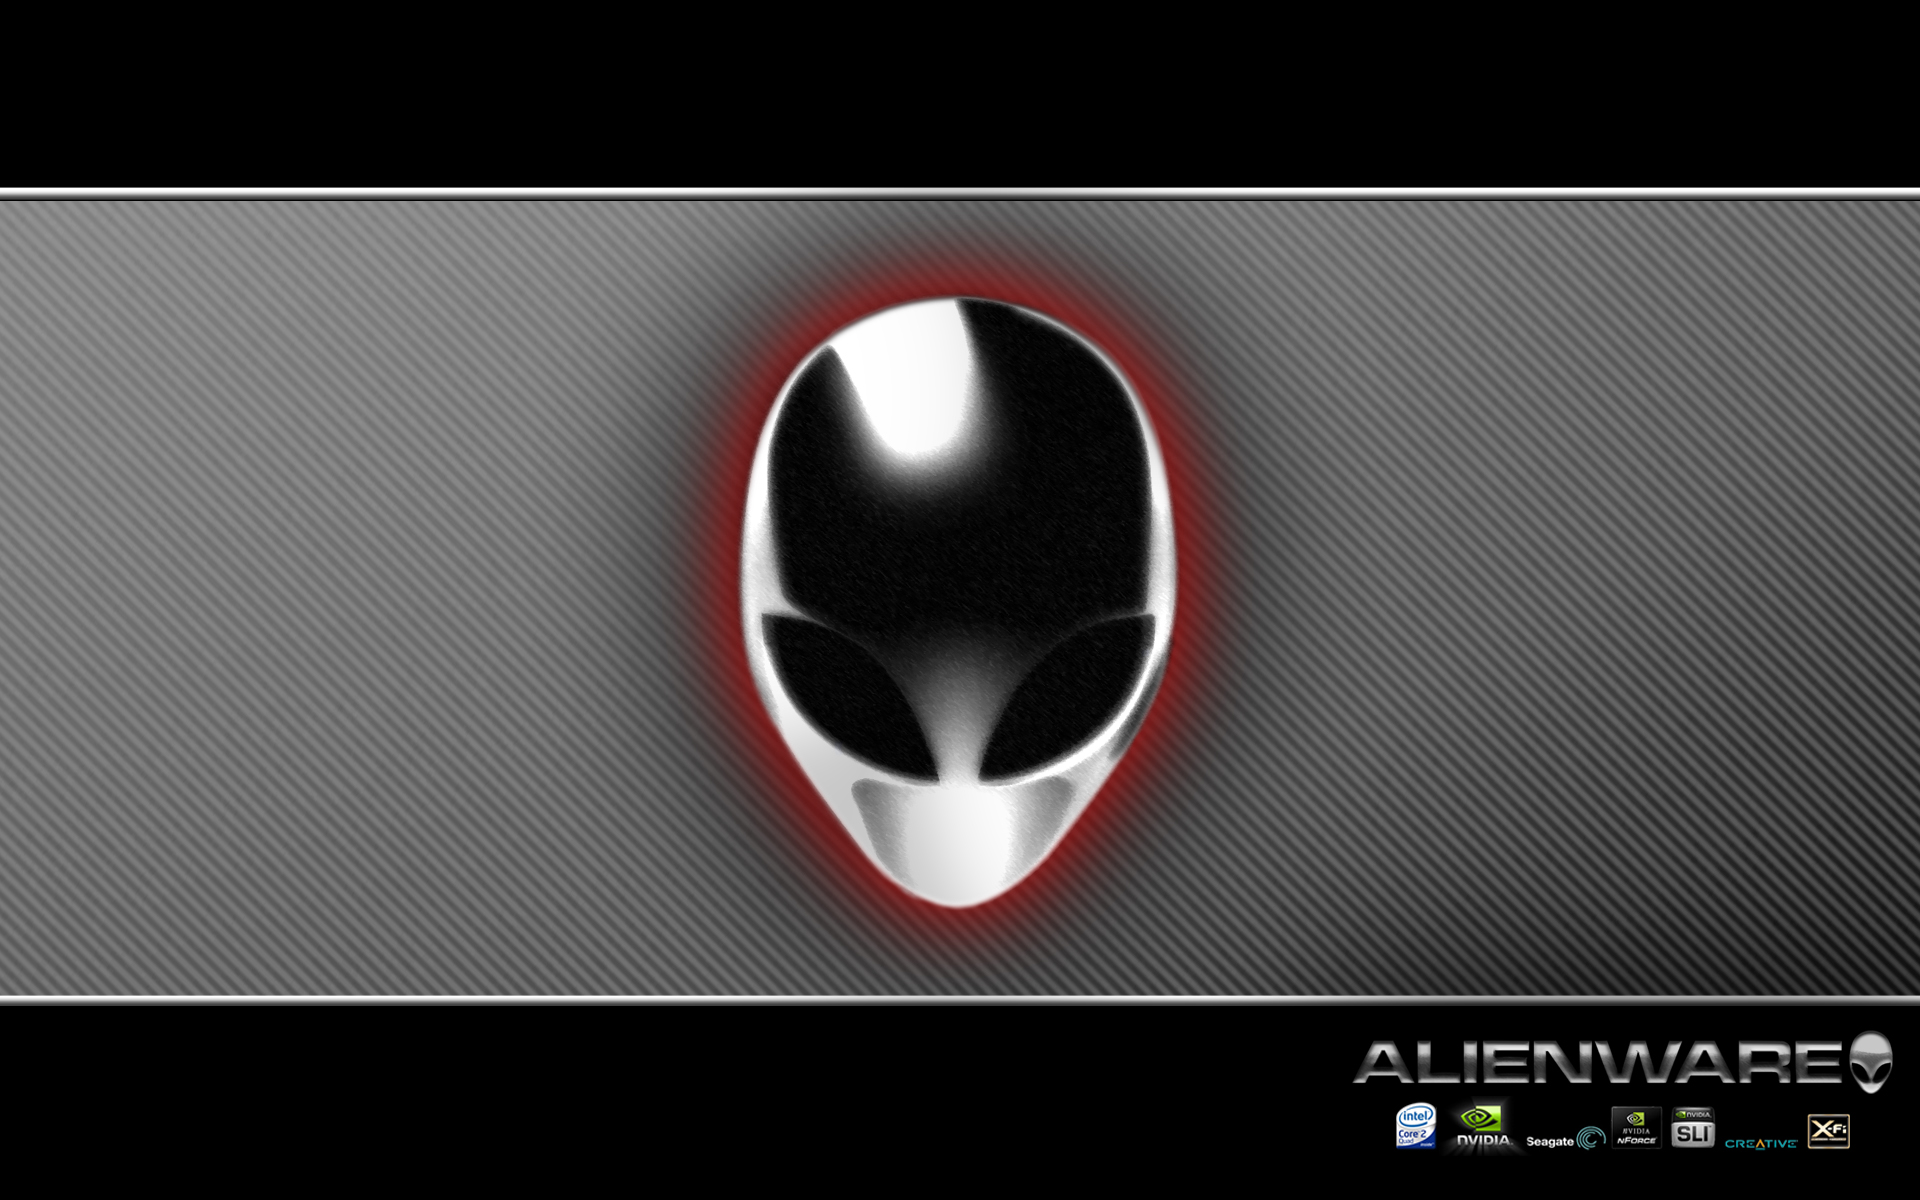 Alienware Logos Wallpaper 1920x1200 Alienware Logos